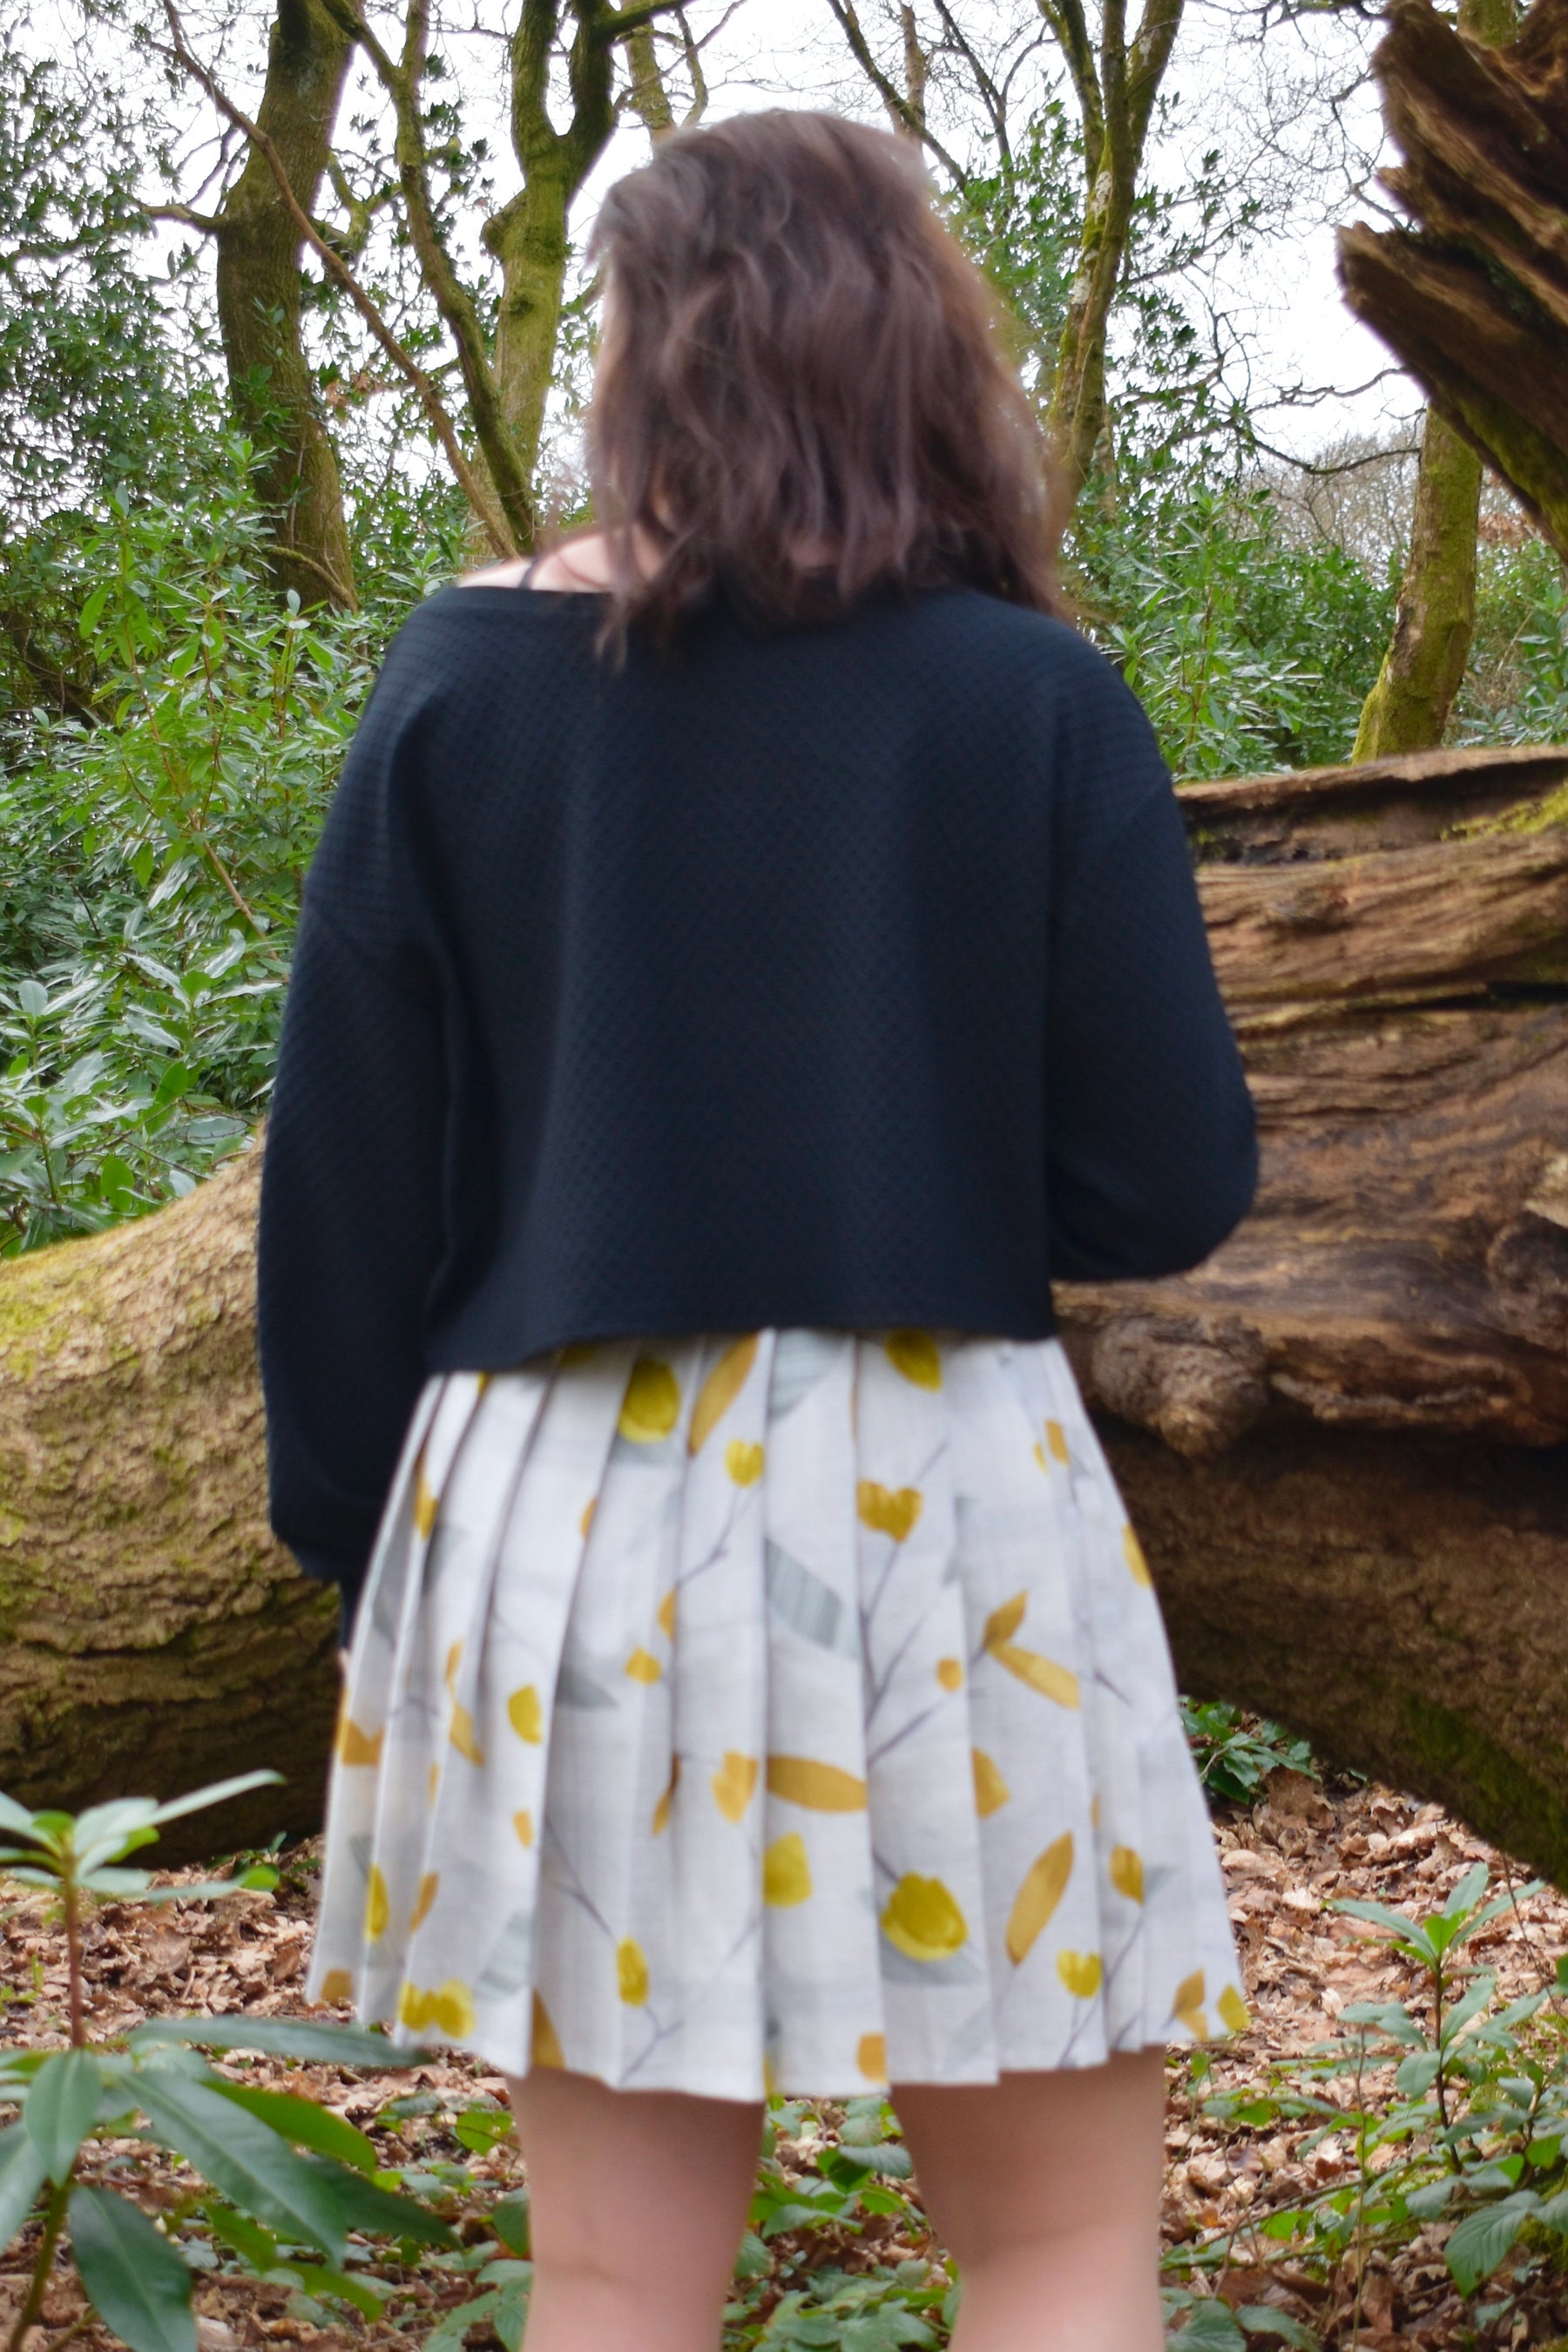 Adult High Waist Pleated Skirt Pattern